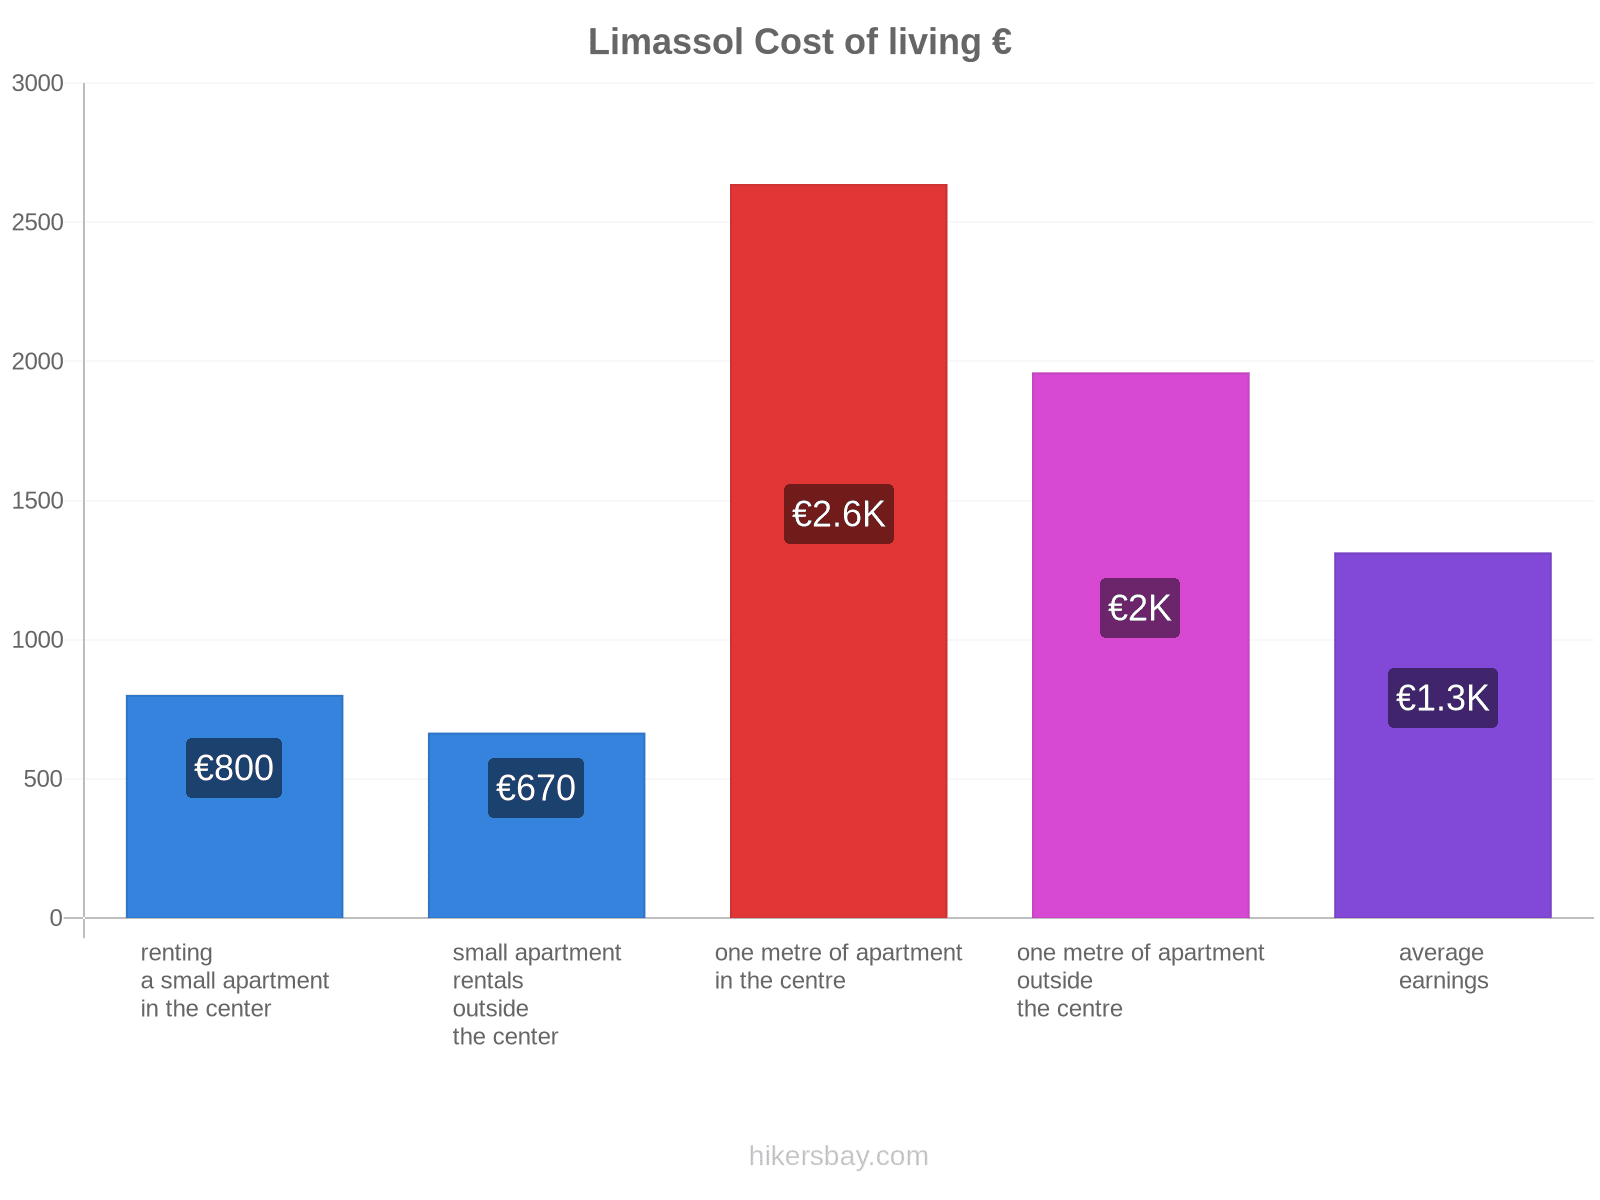 Limassol cost of living hikersbay.com